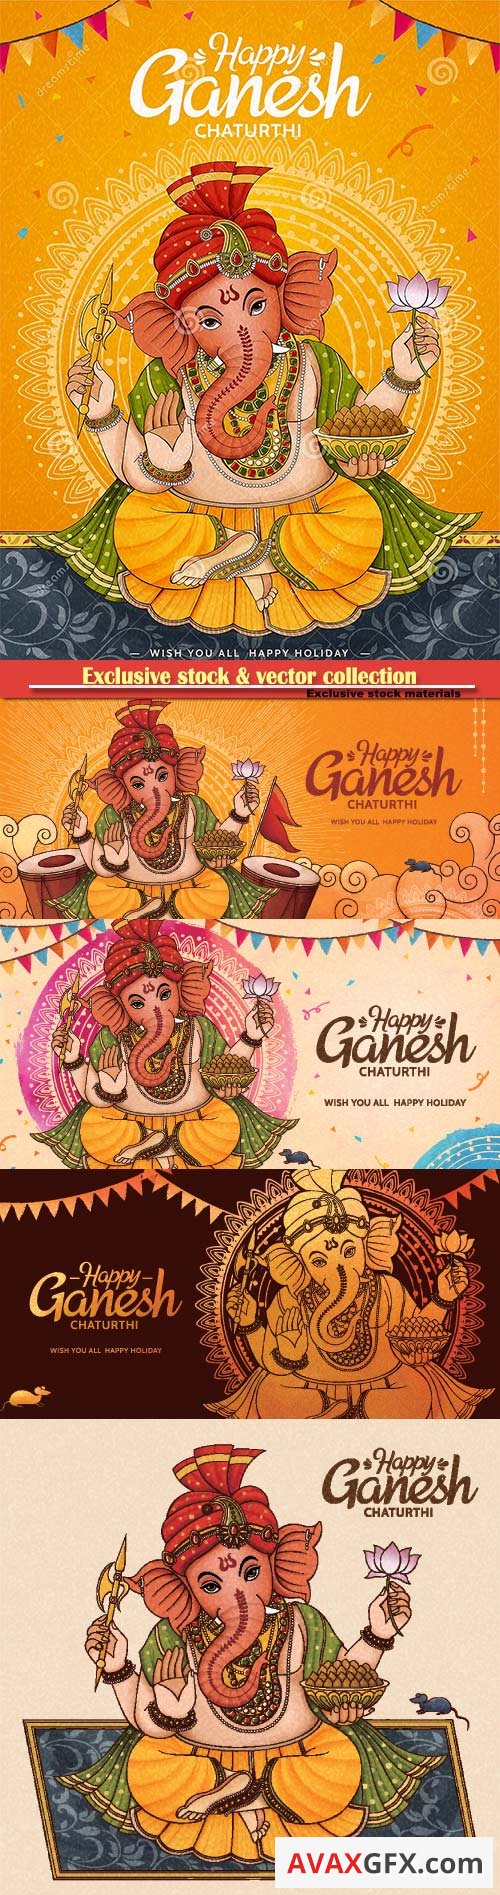 Happy Ganesh Chaturthi poster design